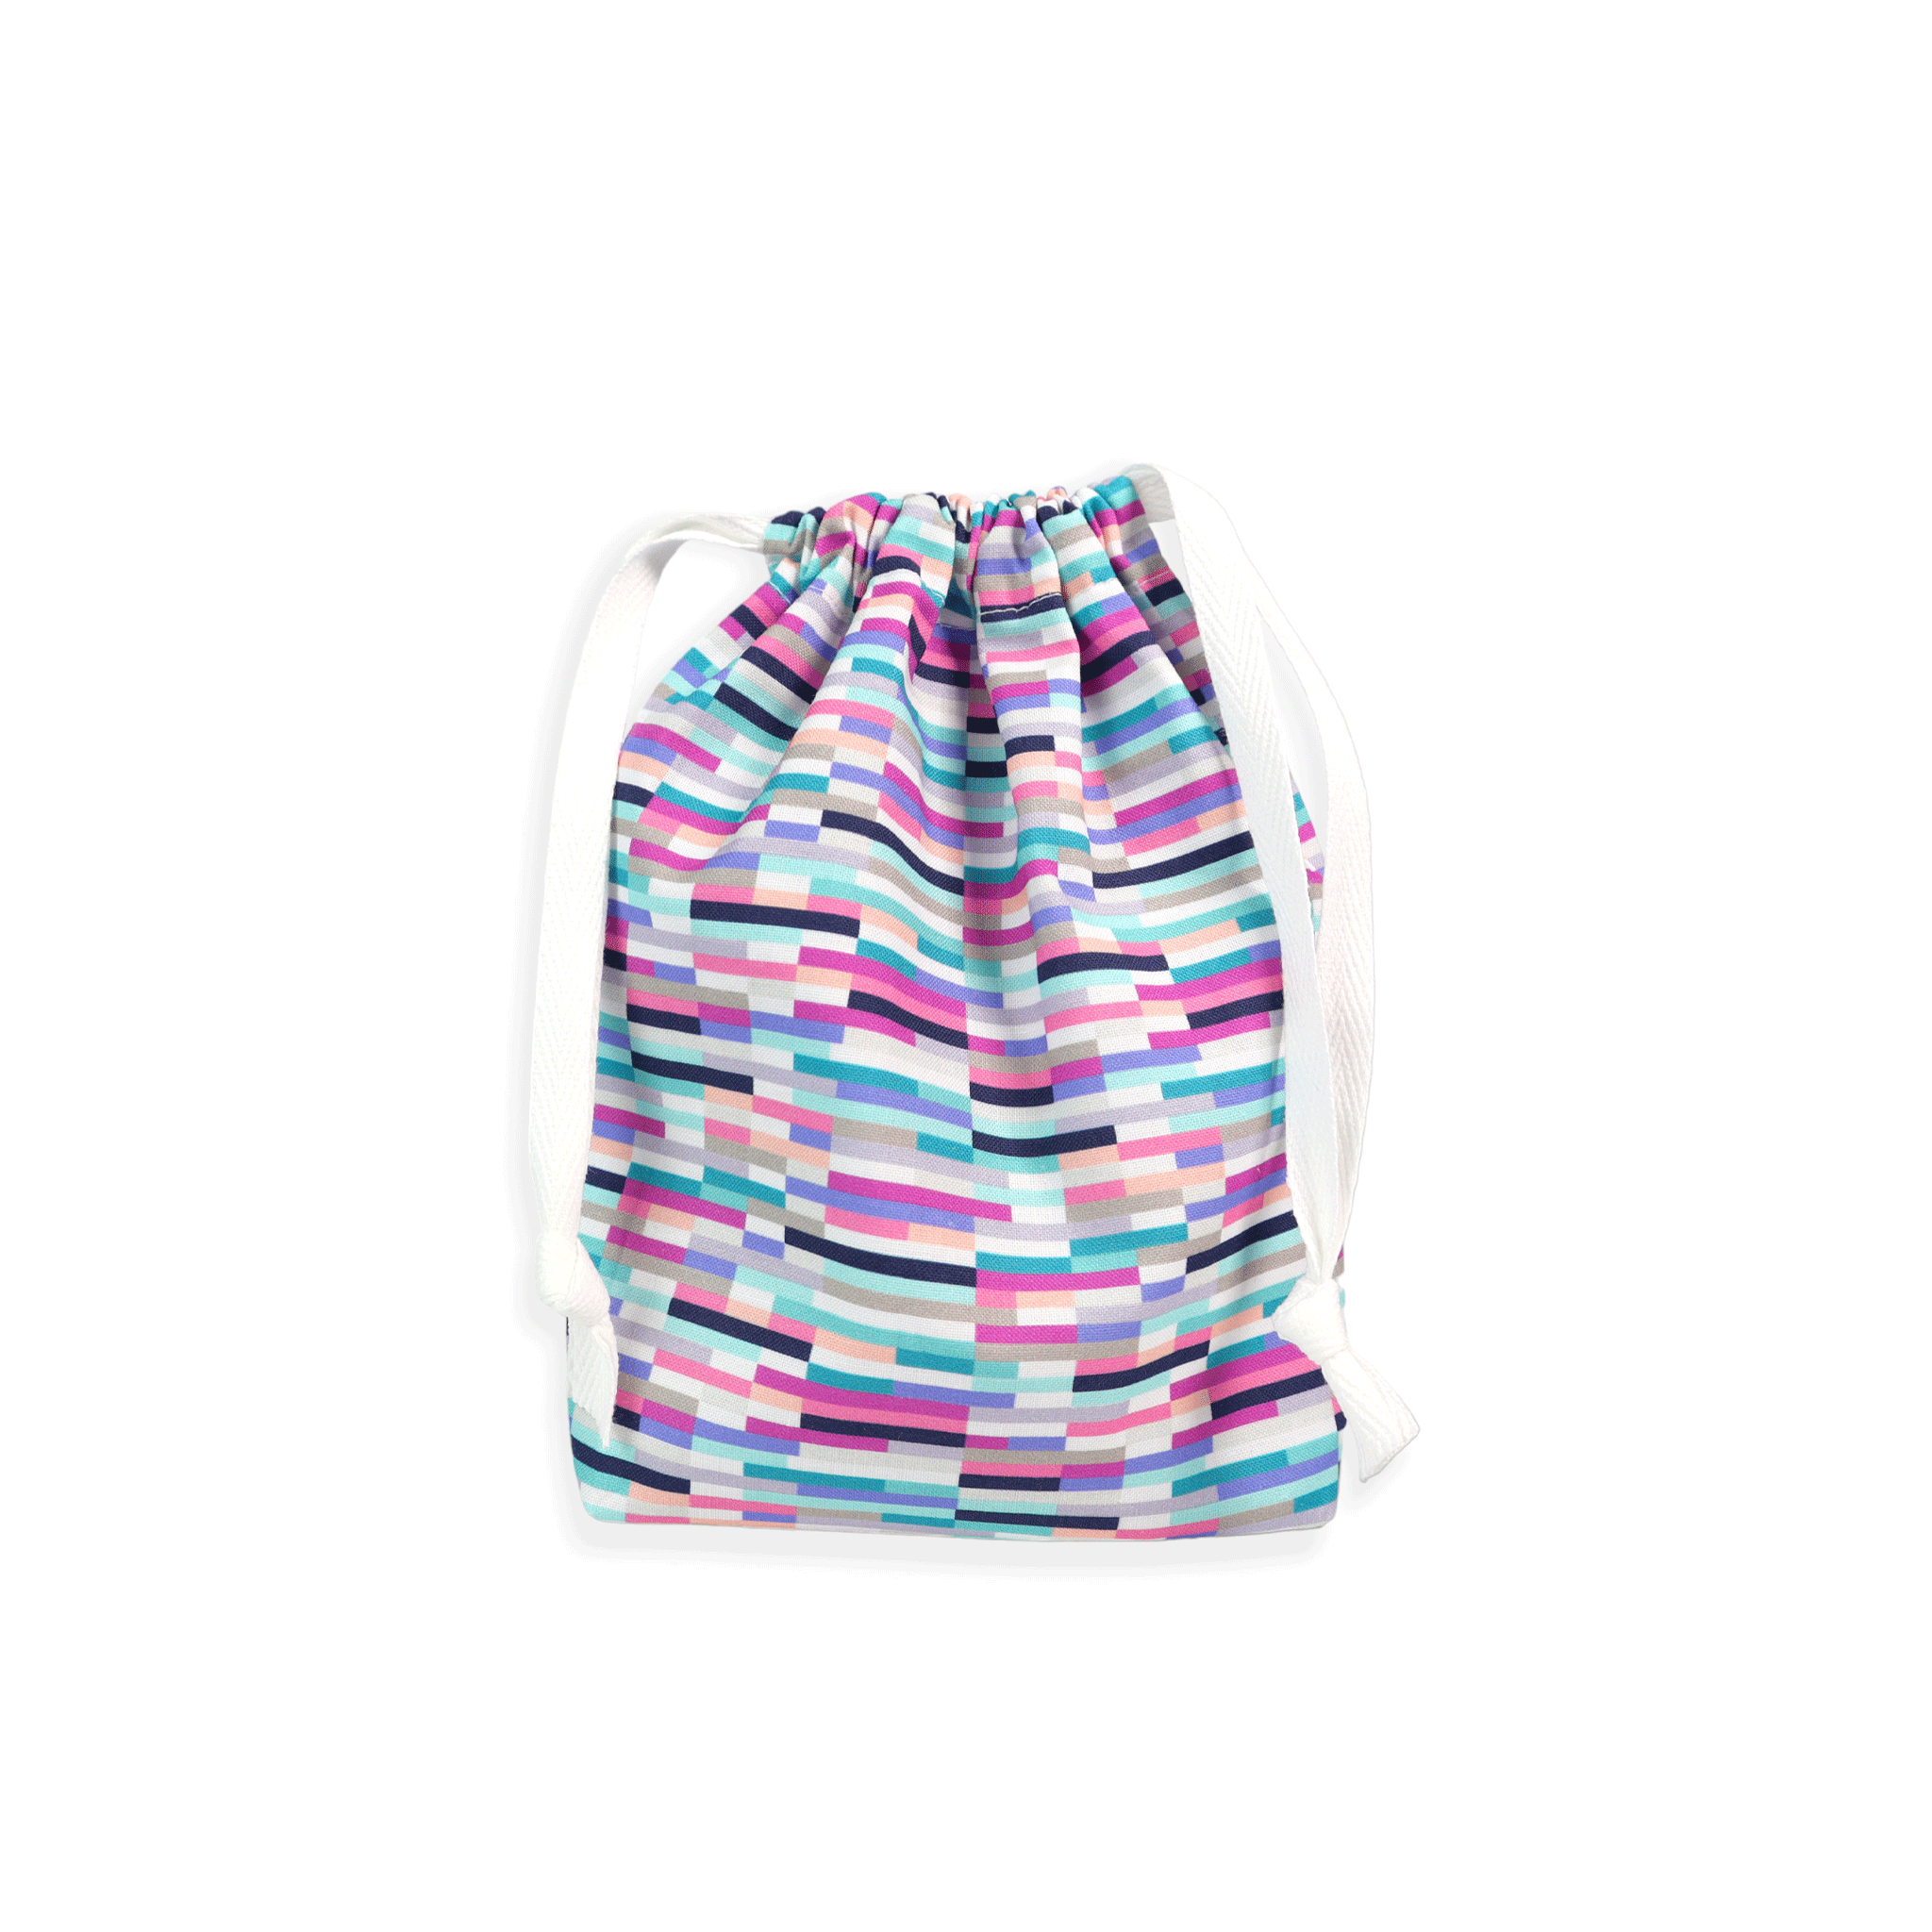 Drawstring Bag Sewing Kit - Block Stripes- Makes 2 Bags